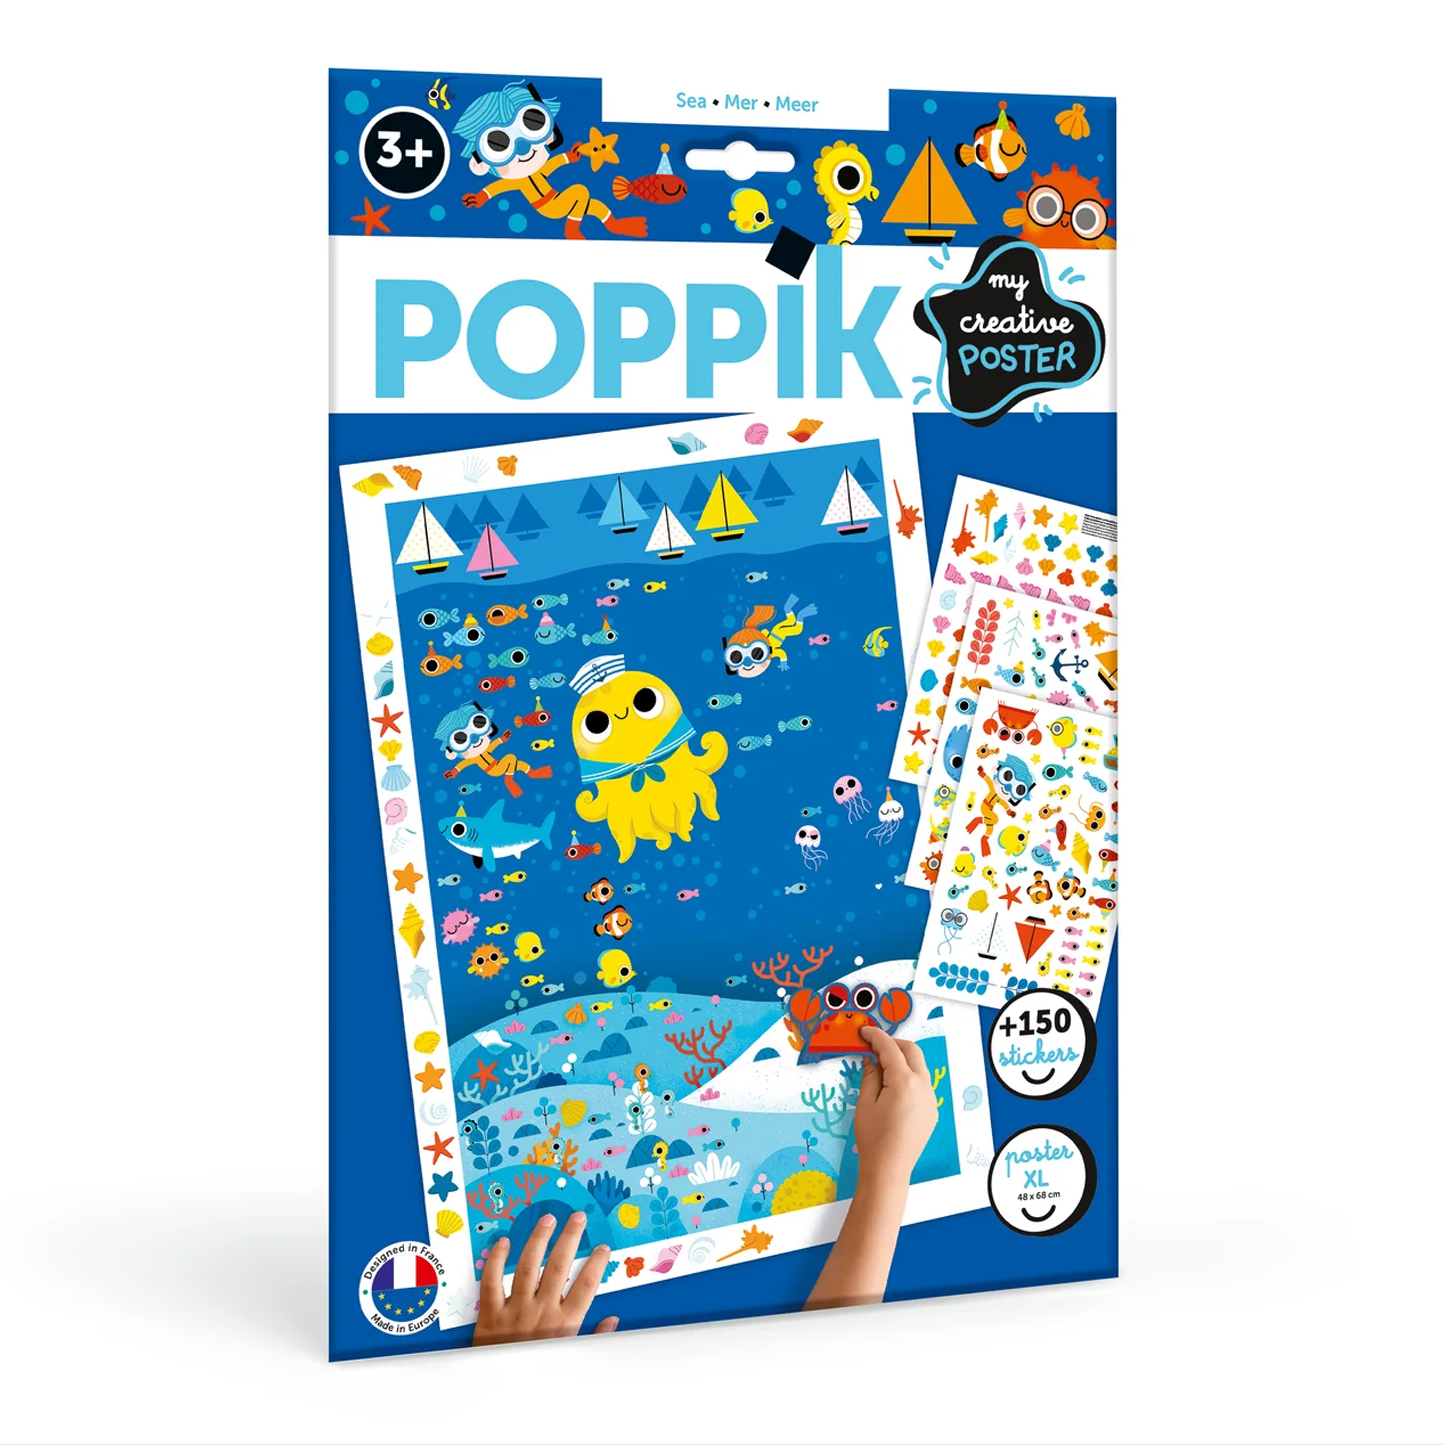  Poppik Creative Sticker Poster - Sea